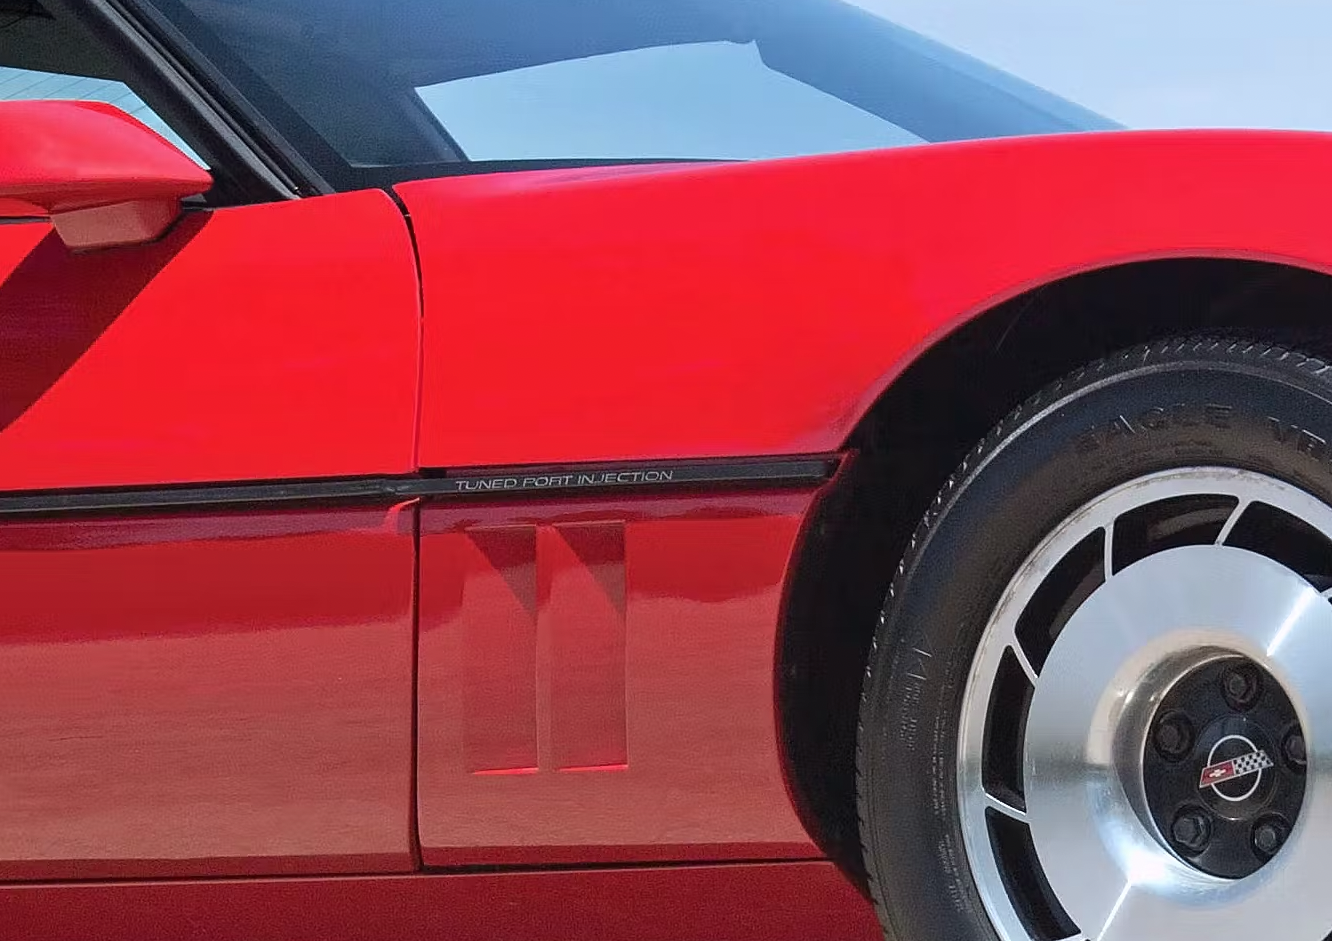 1985 Corvette Tuned Port Injection Emblem.